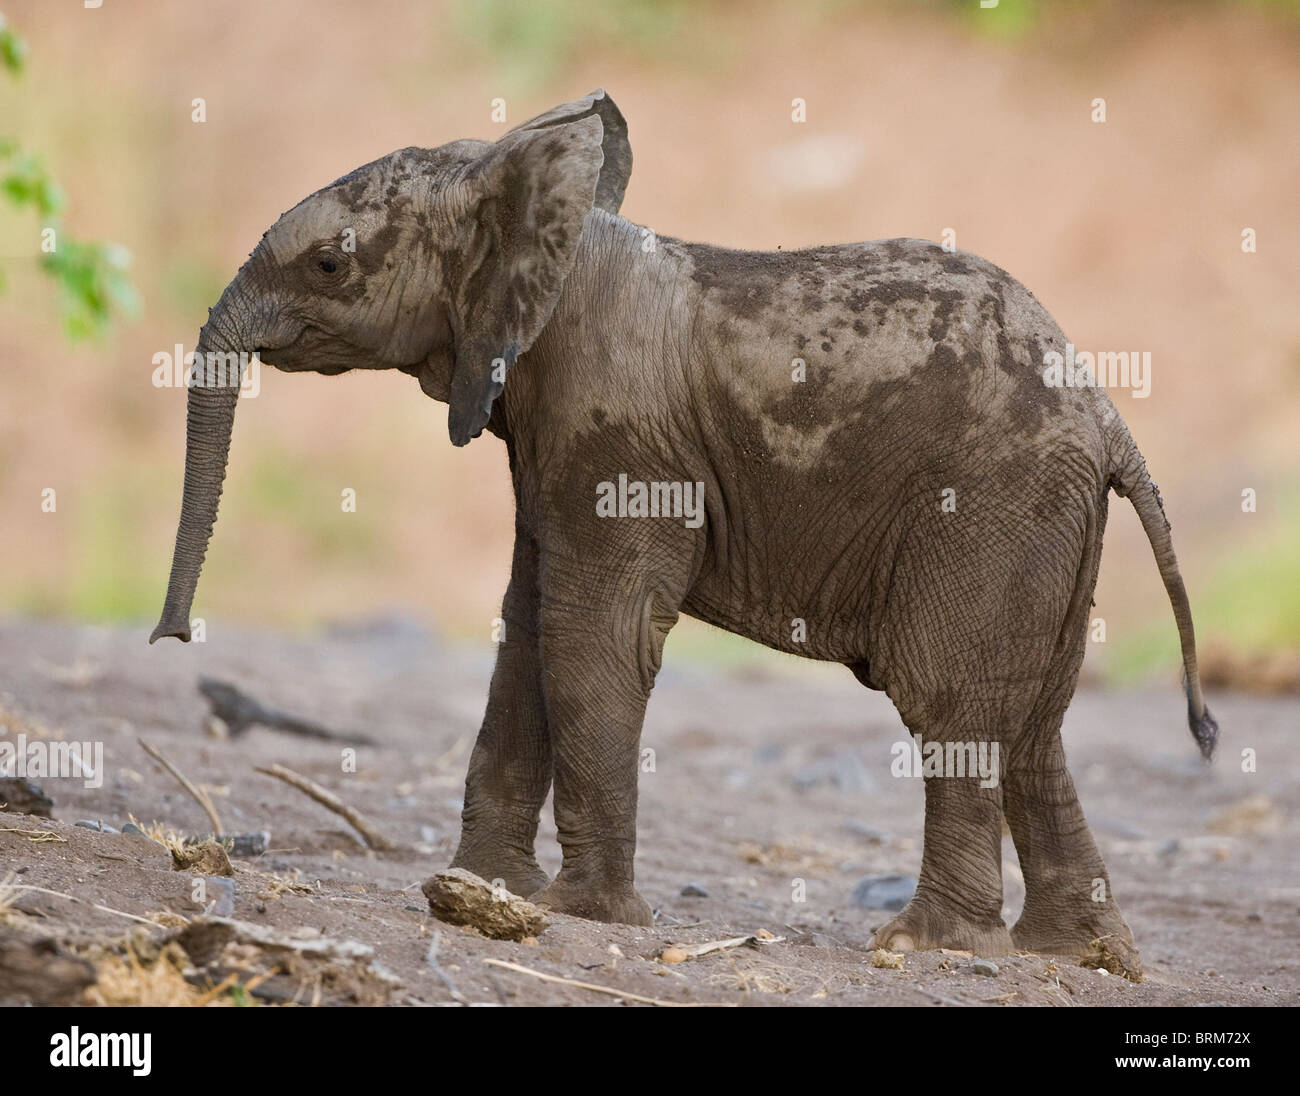 Elefante africano in piedi da sé Foto Stock